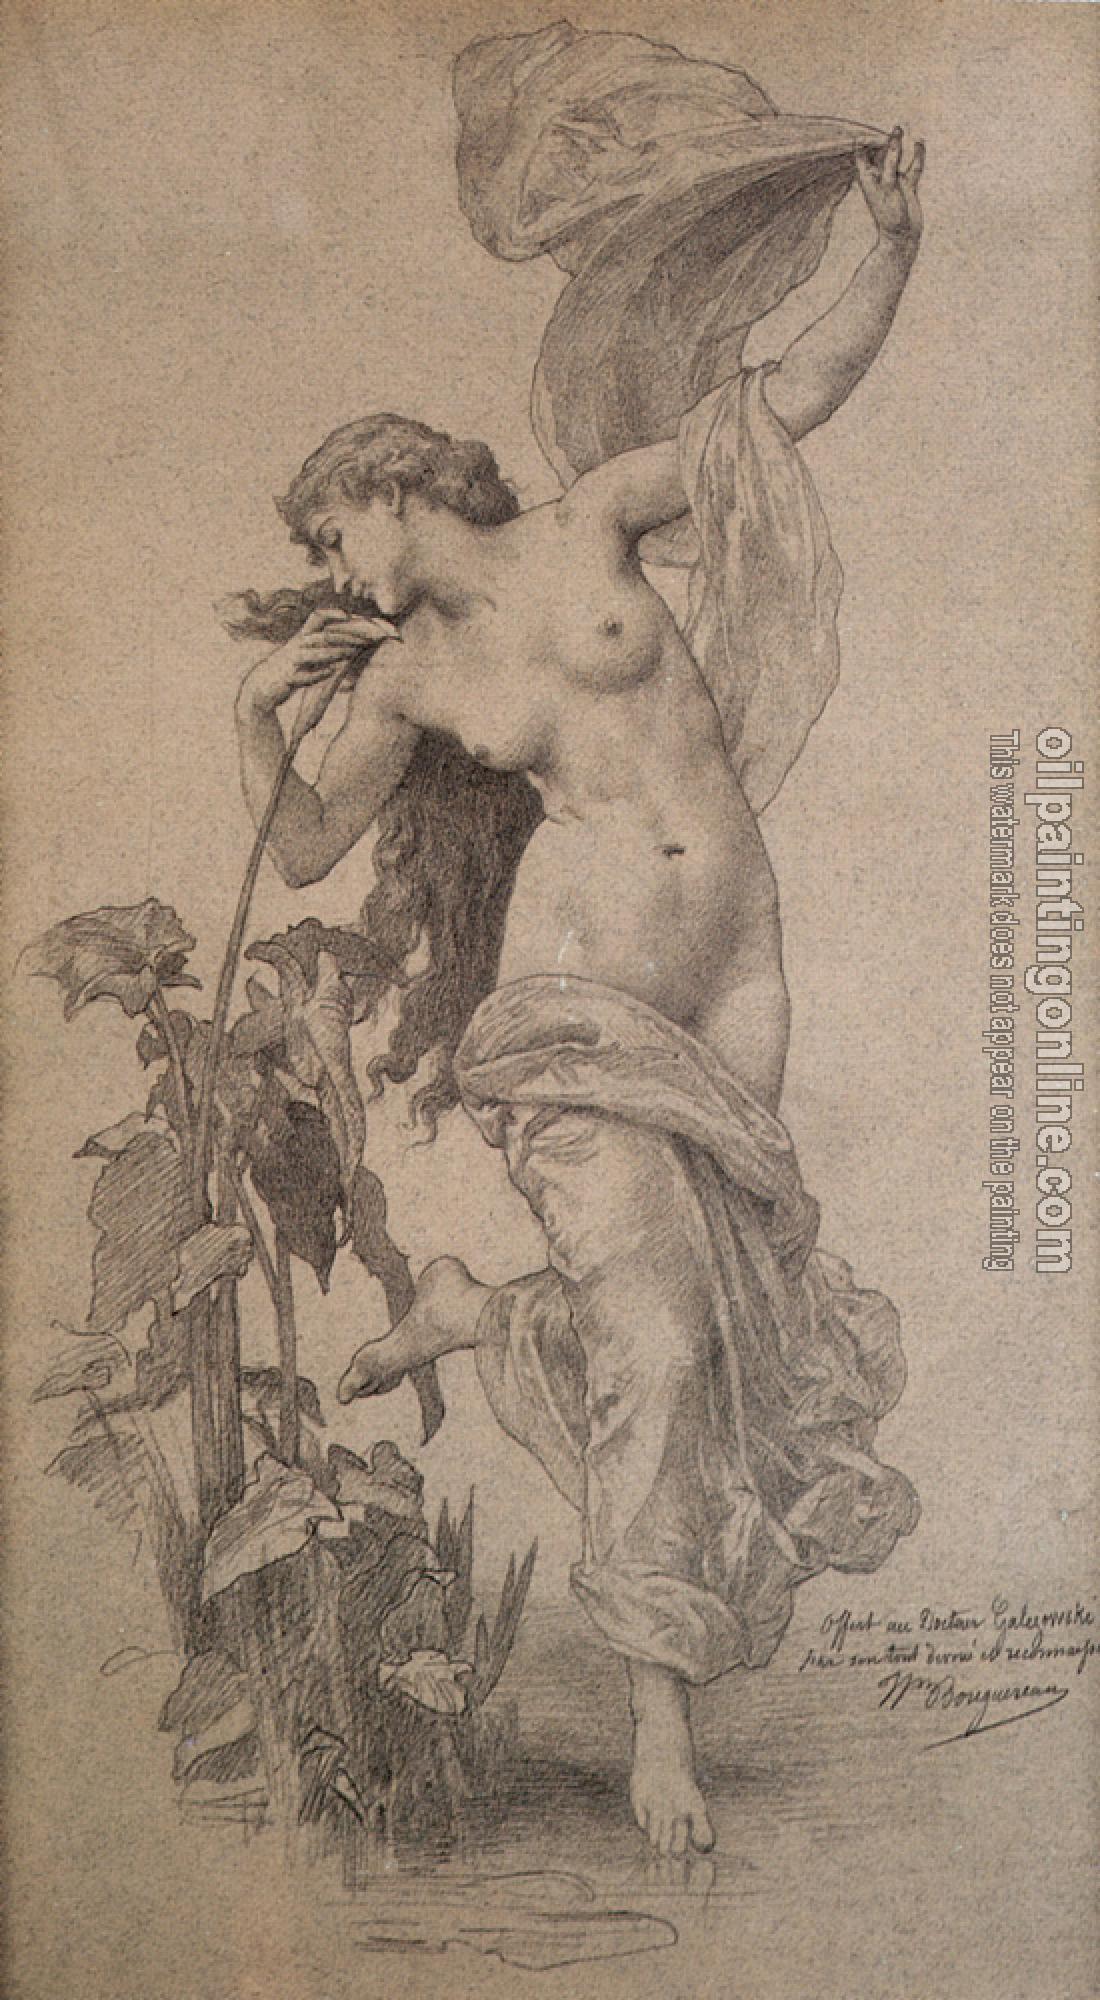 Bouguereau, William-Adolphe - L'aurore, Dawn